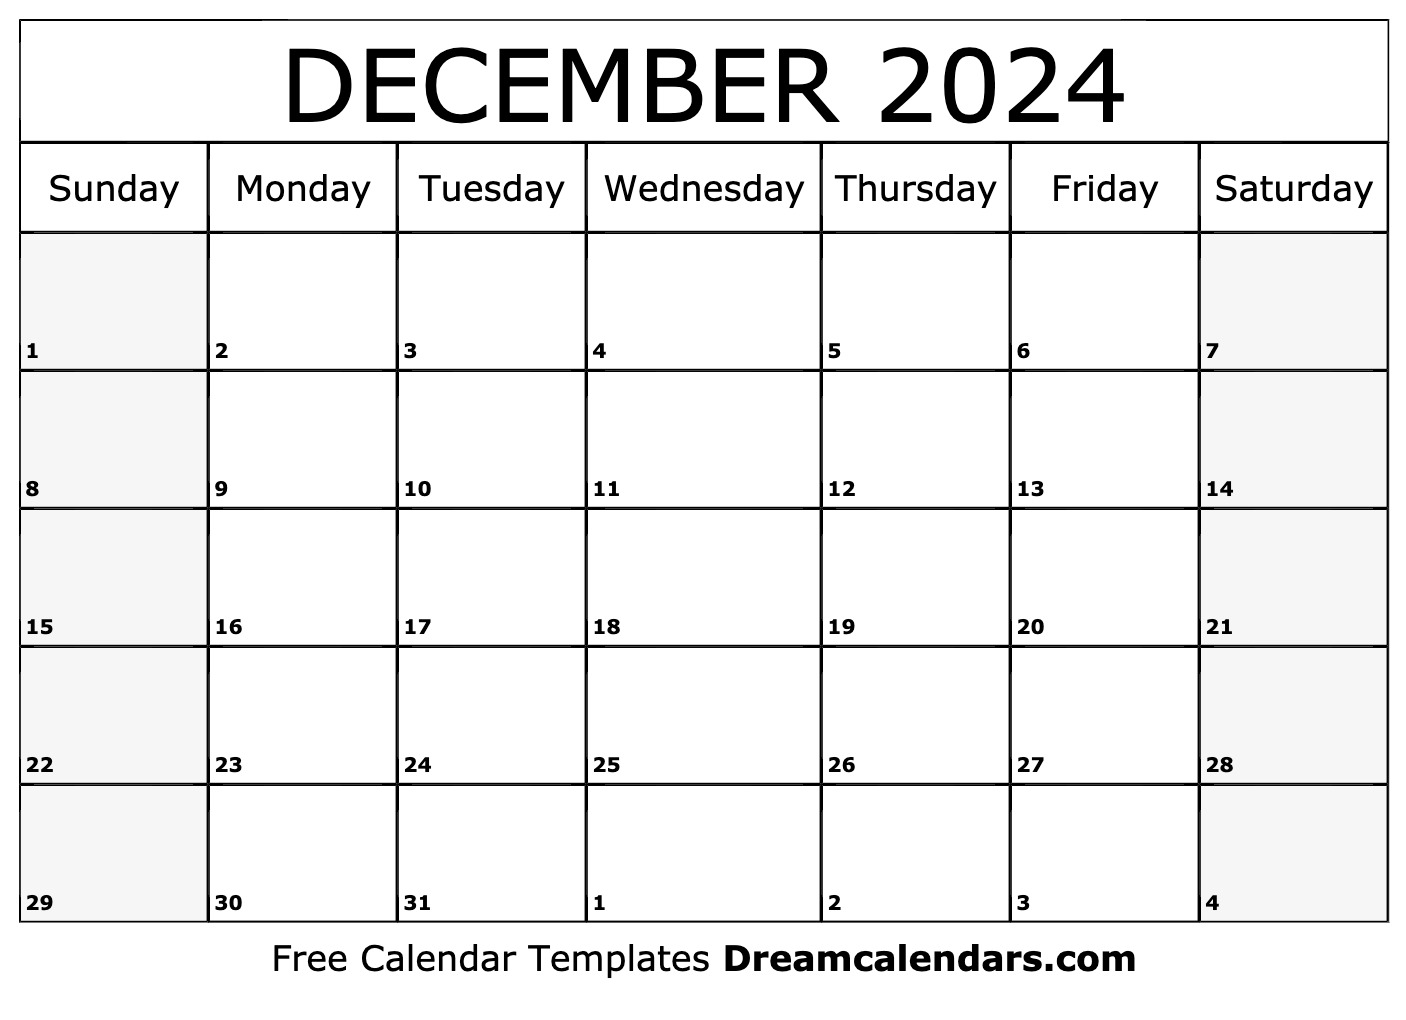 calendar-dec-2024-excel-eydie-jaquith